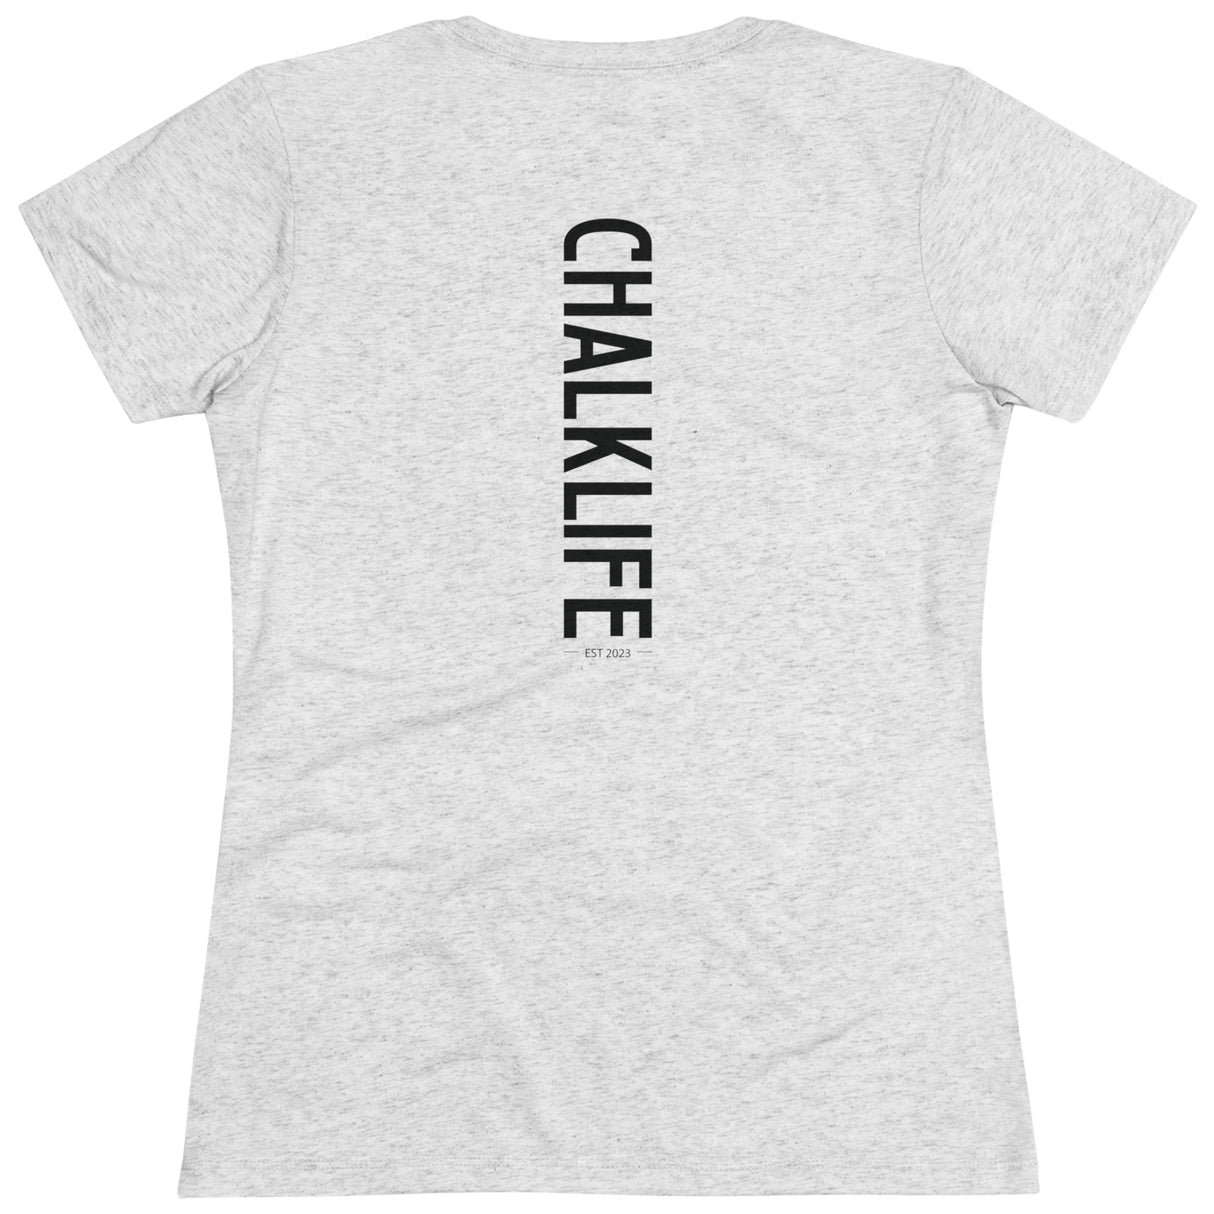 Arkansas Gymnastics T-Shirt (Fitted) - Chalklife, LLC